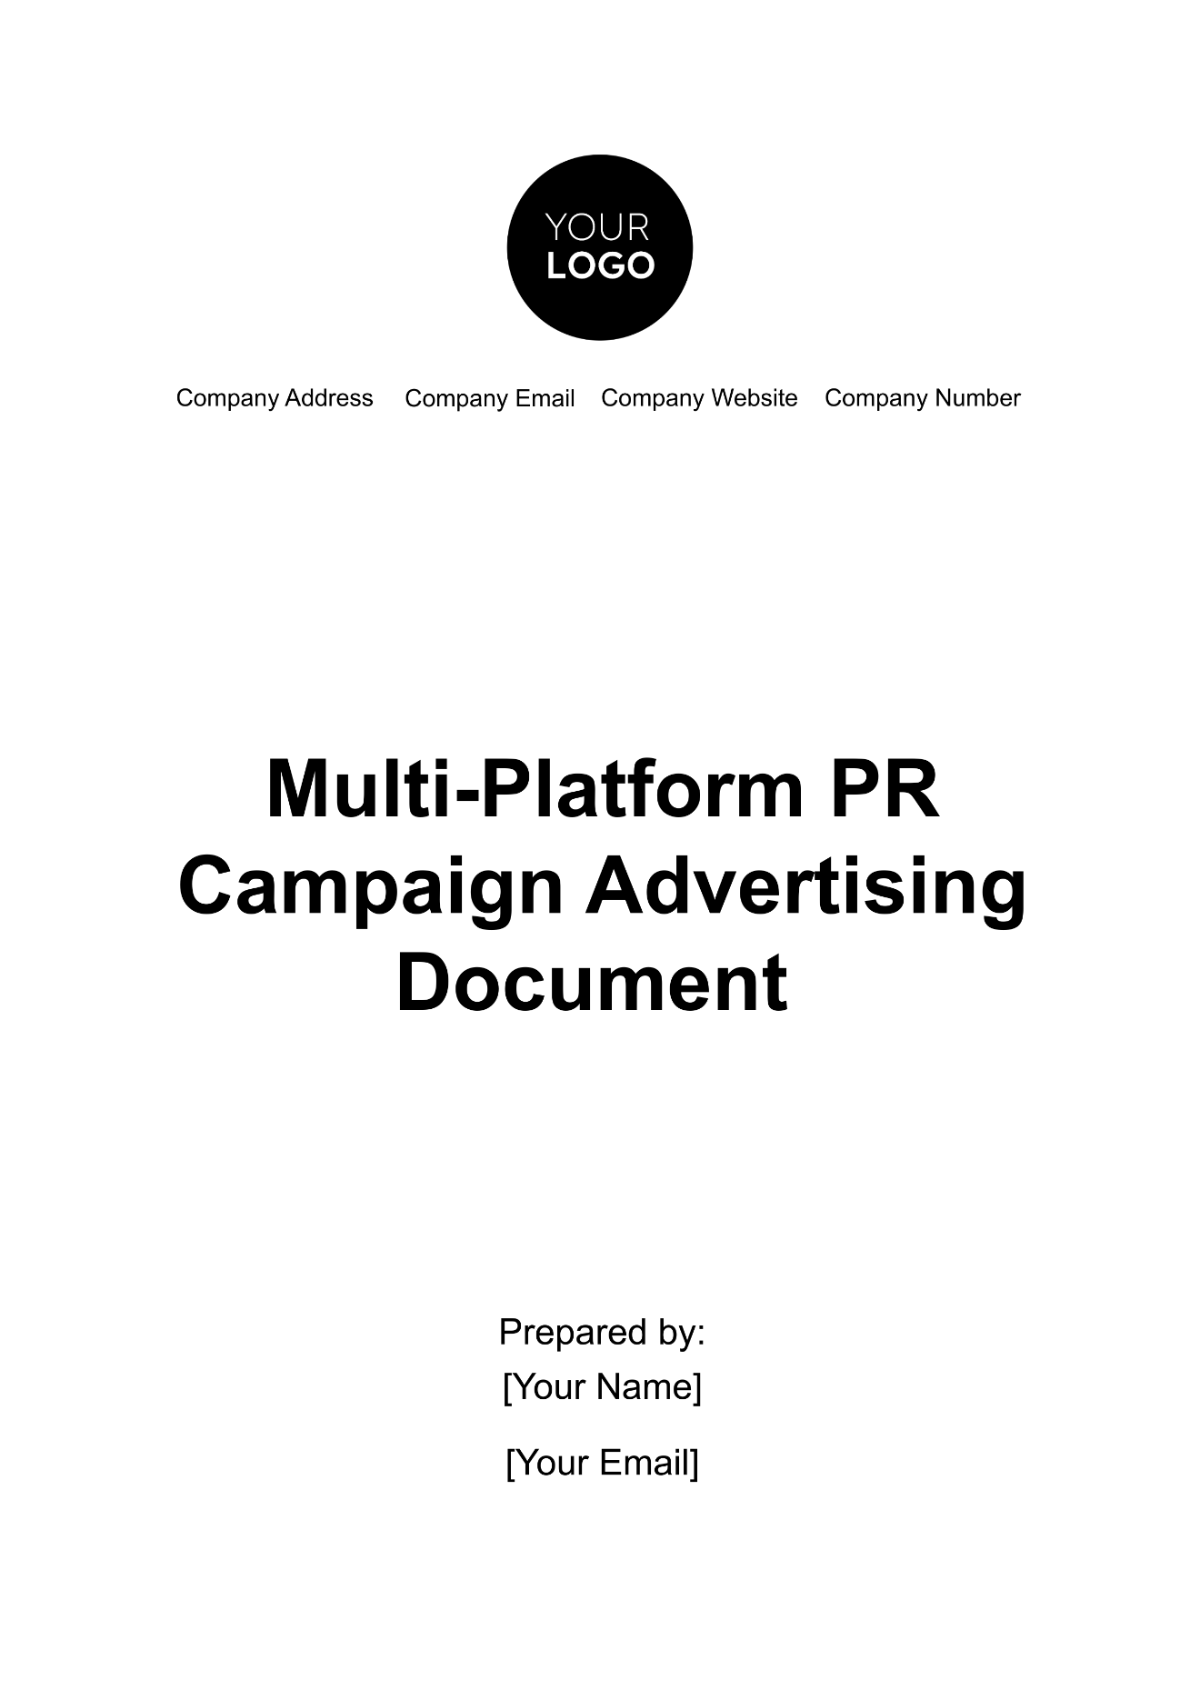 Multi-Platform PR Campaign Advertising Document Template